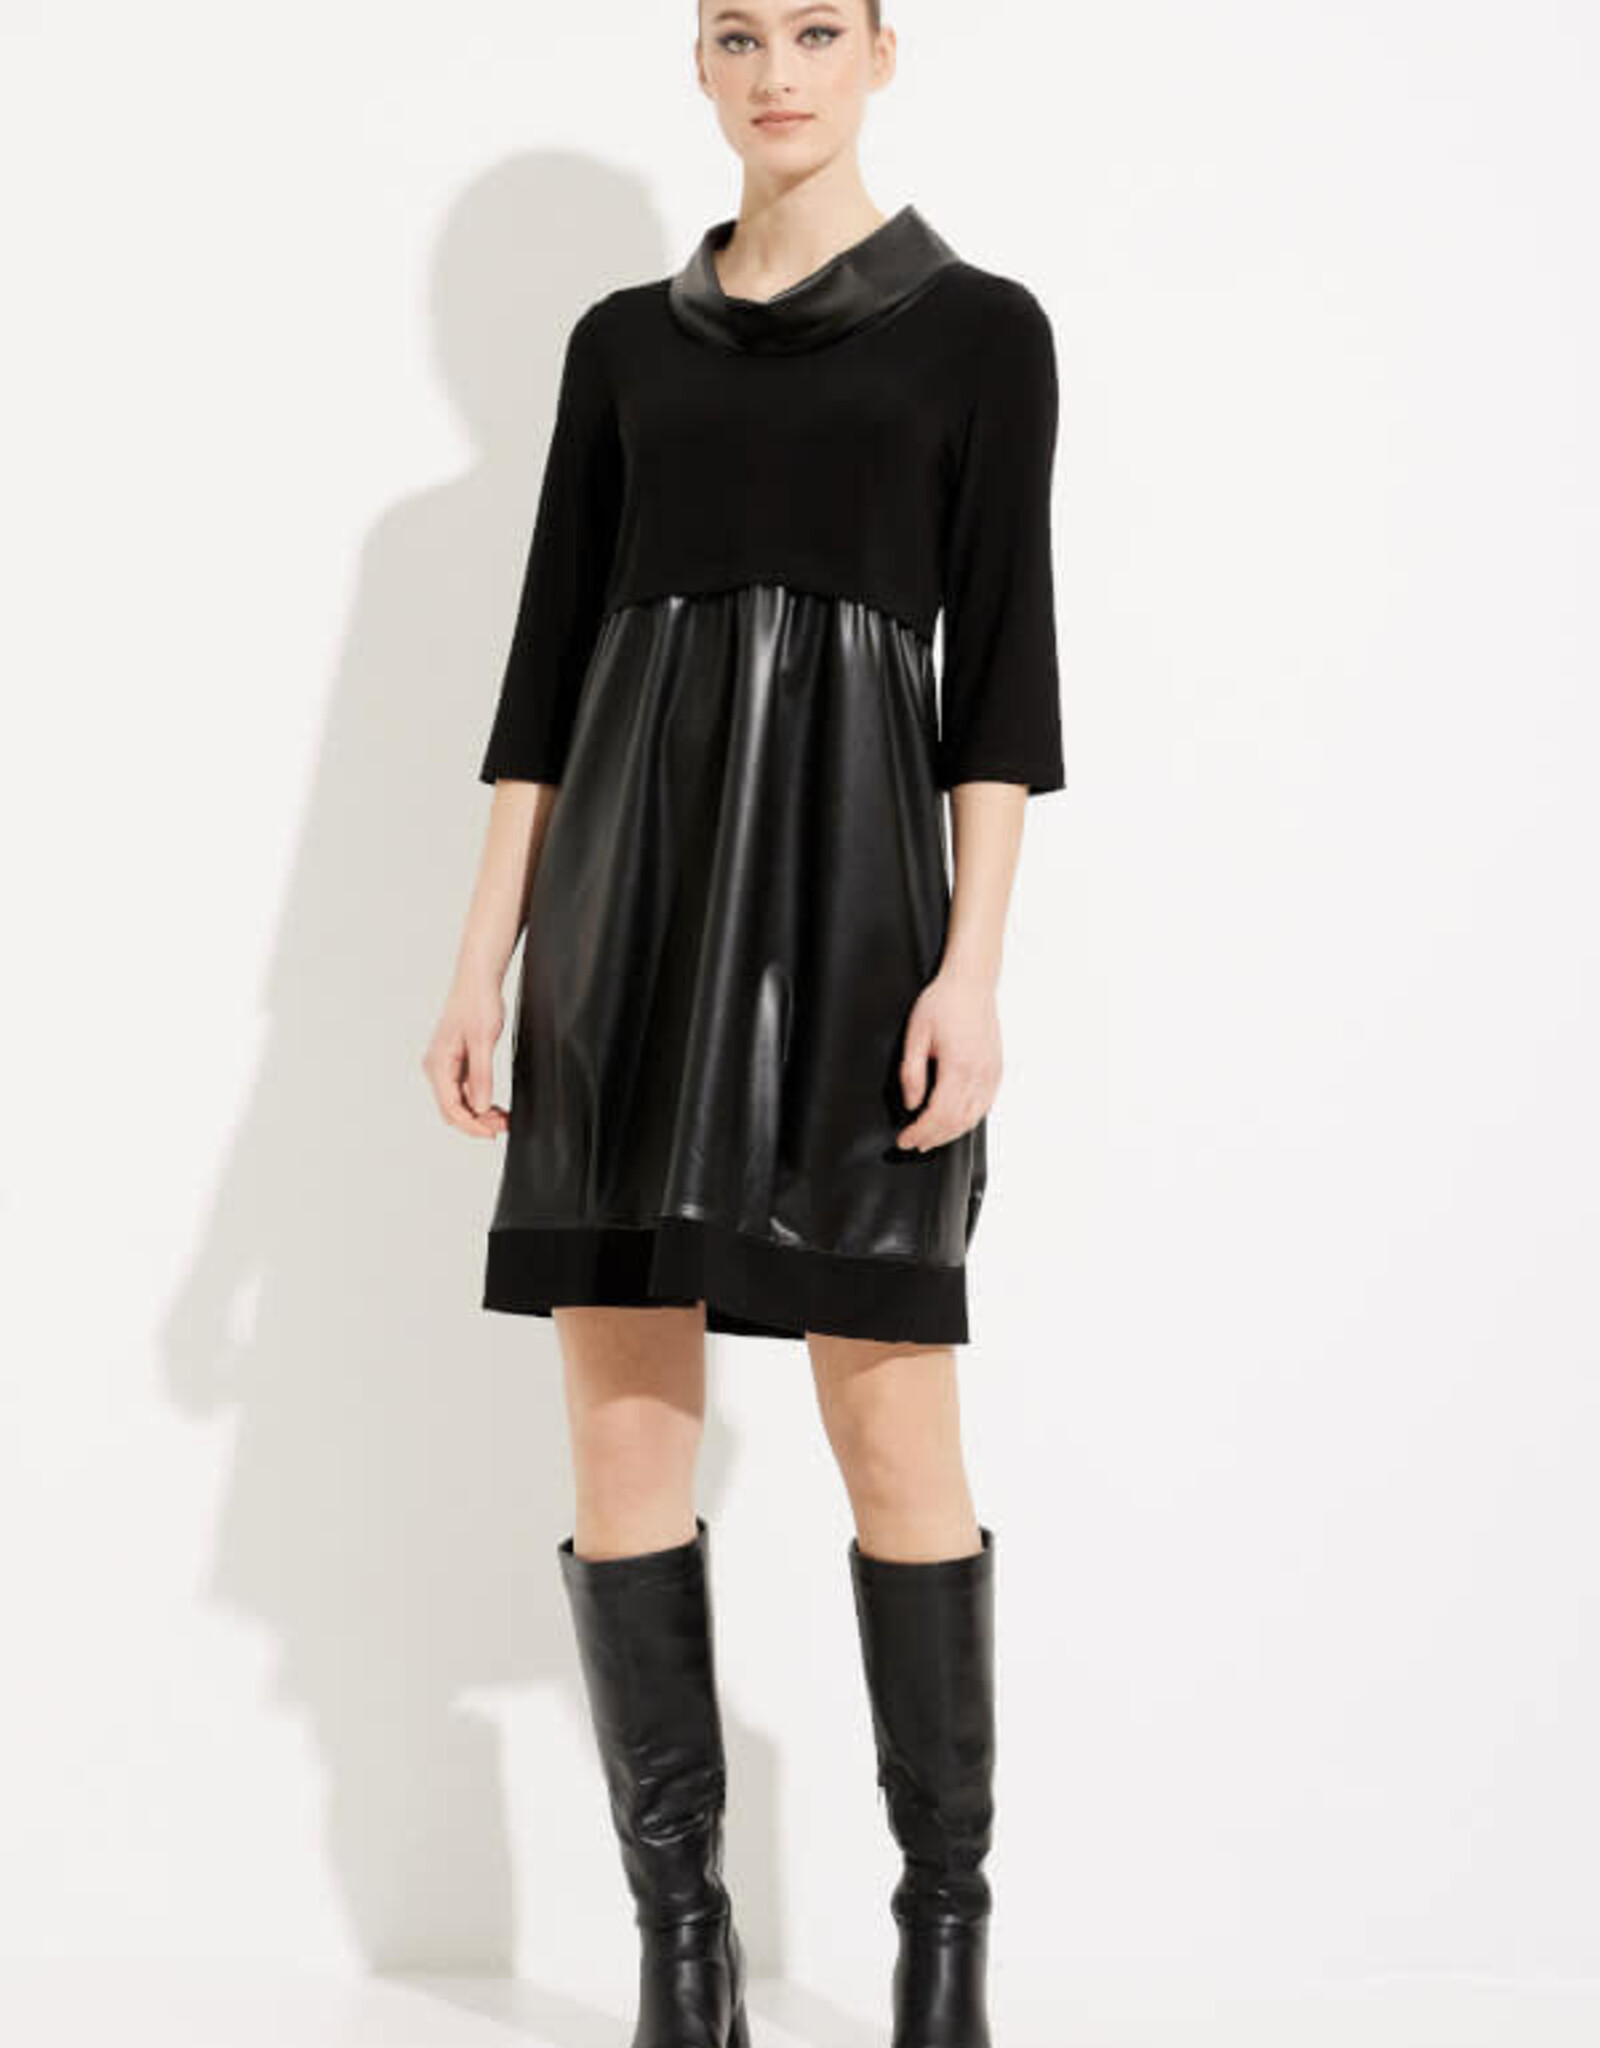 Joseph Ribkoff Black Faux Leather Cocoon Dress